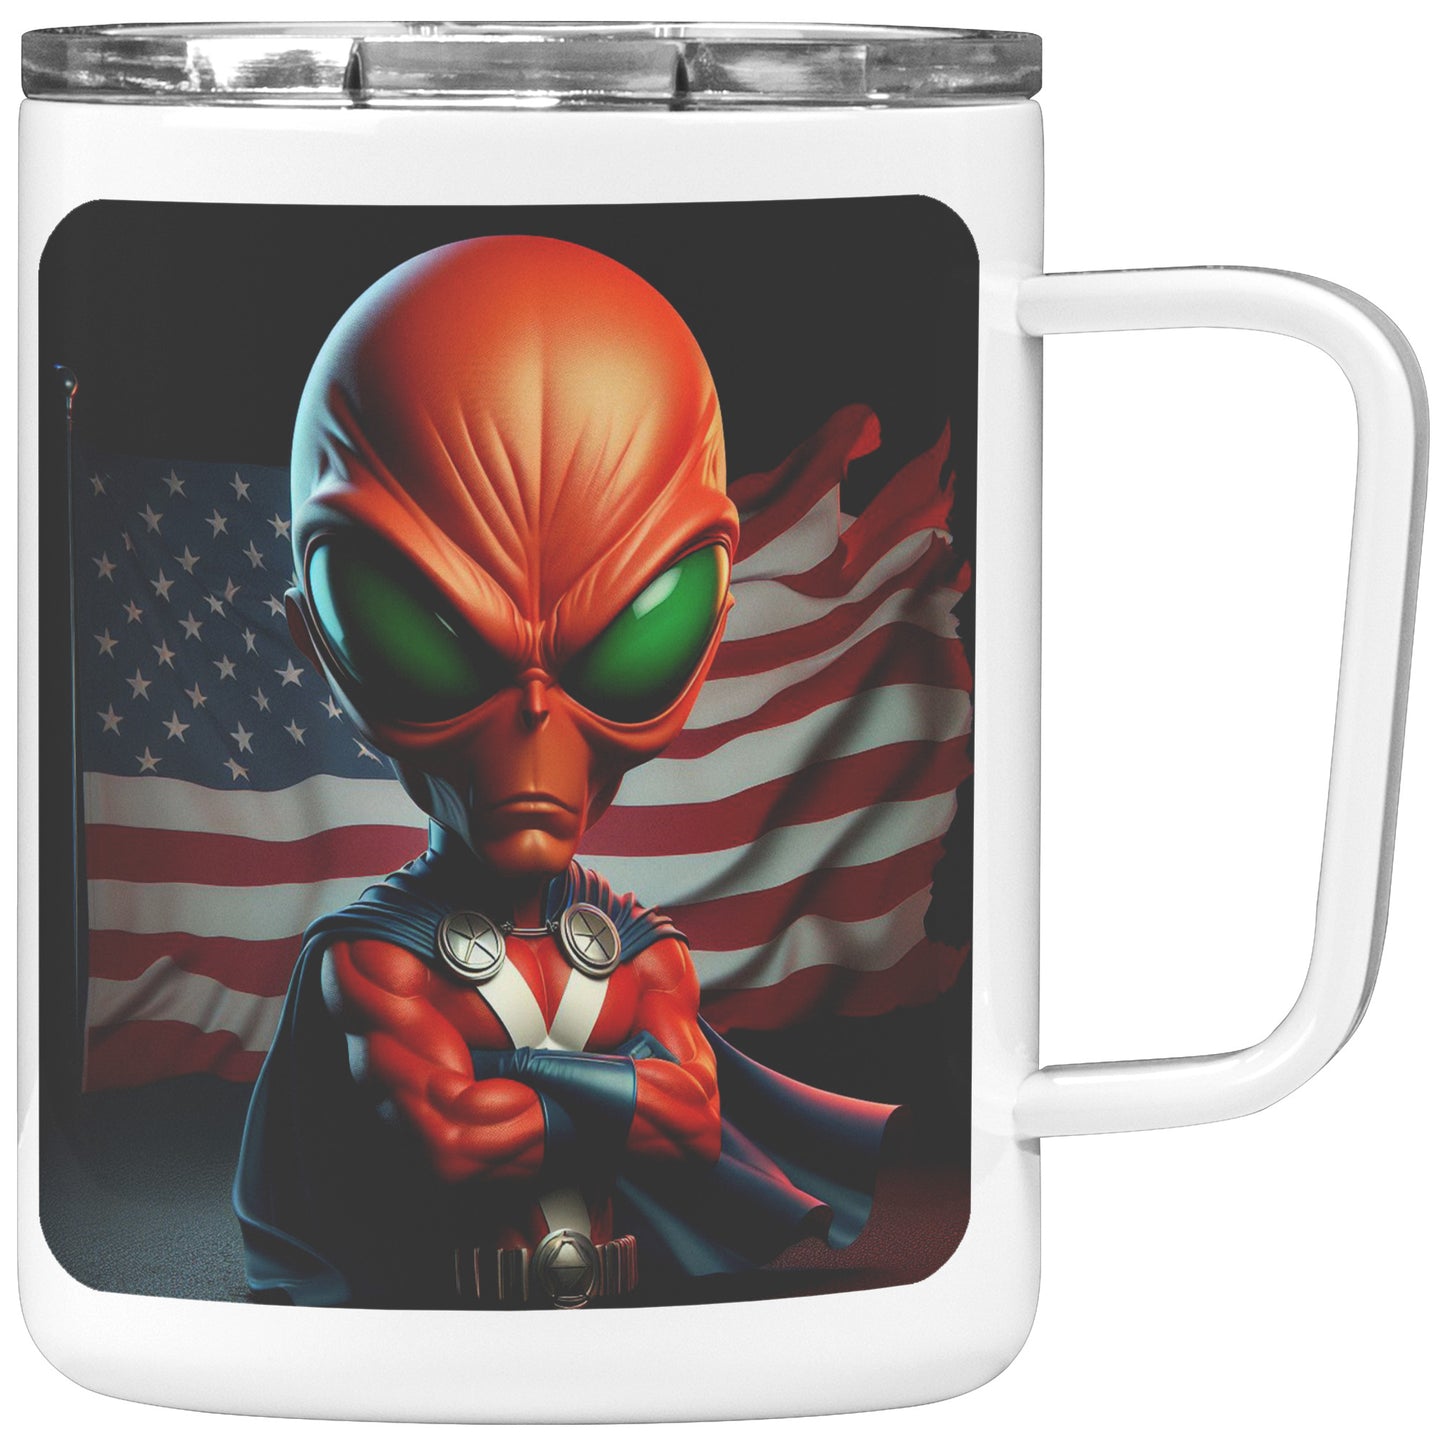 Martian Alien Caricature - Coffee Mug #6